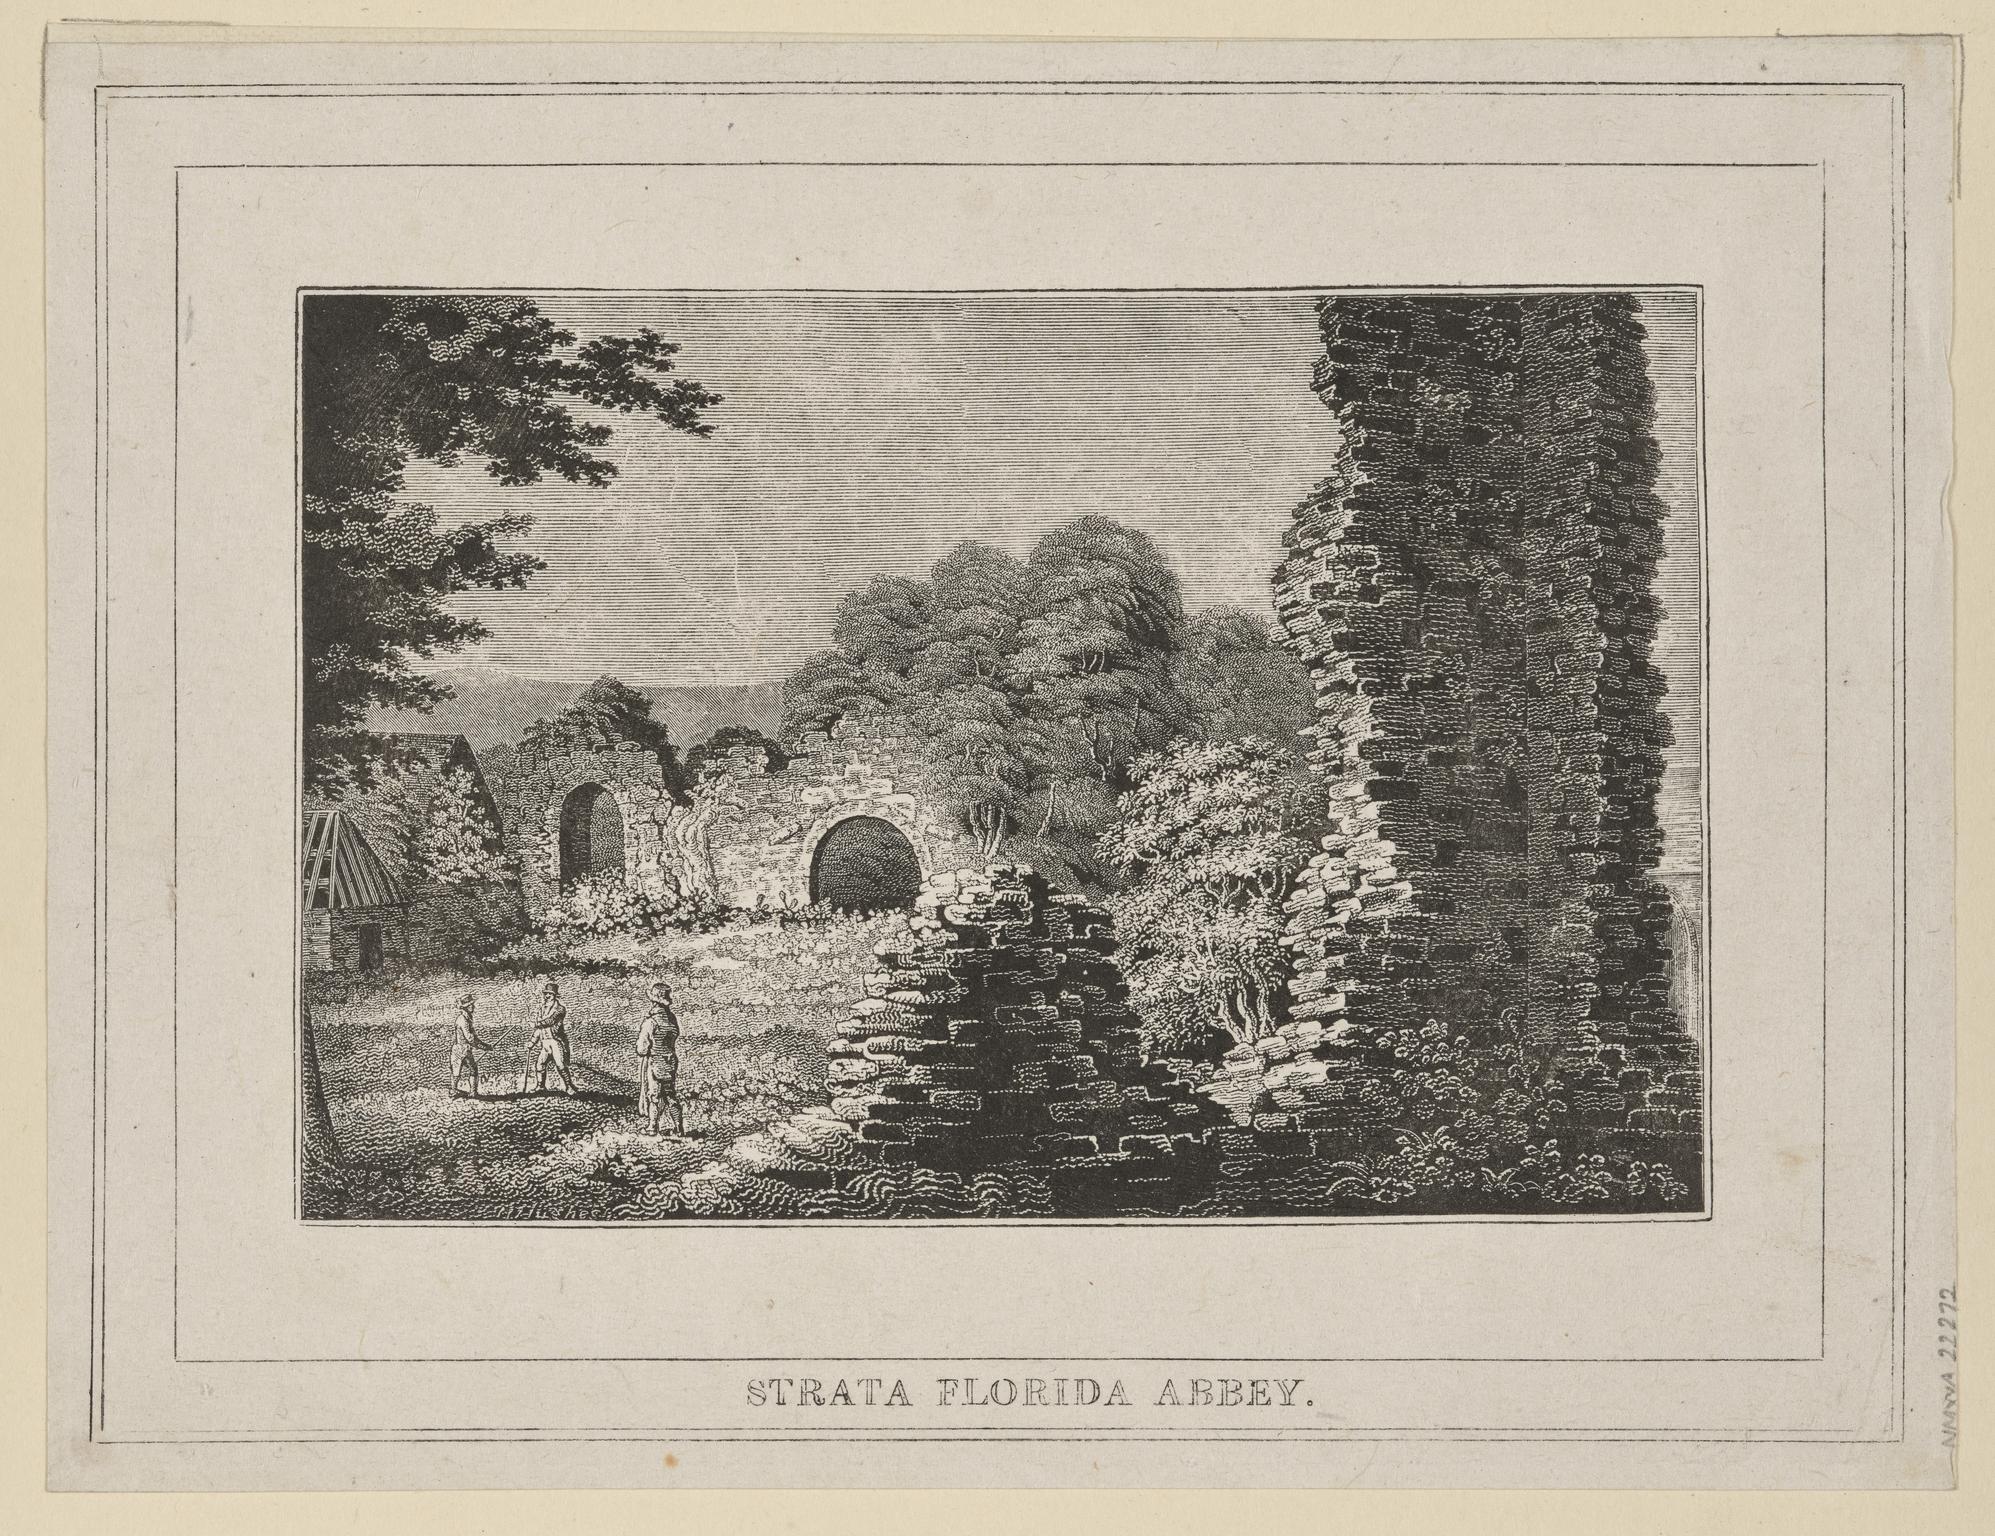 Strata Florida Abbey